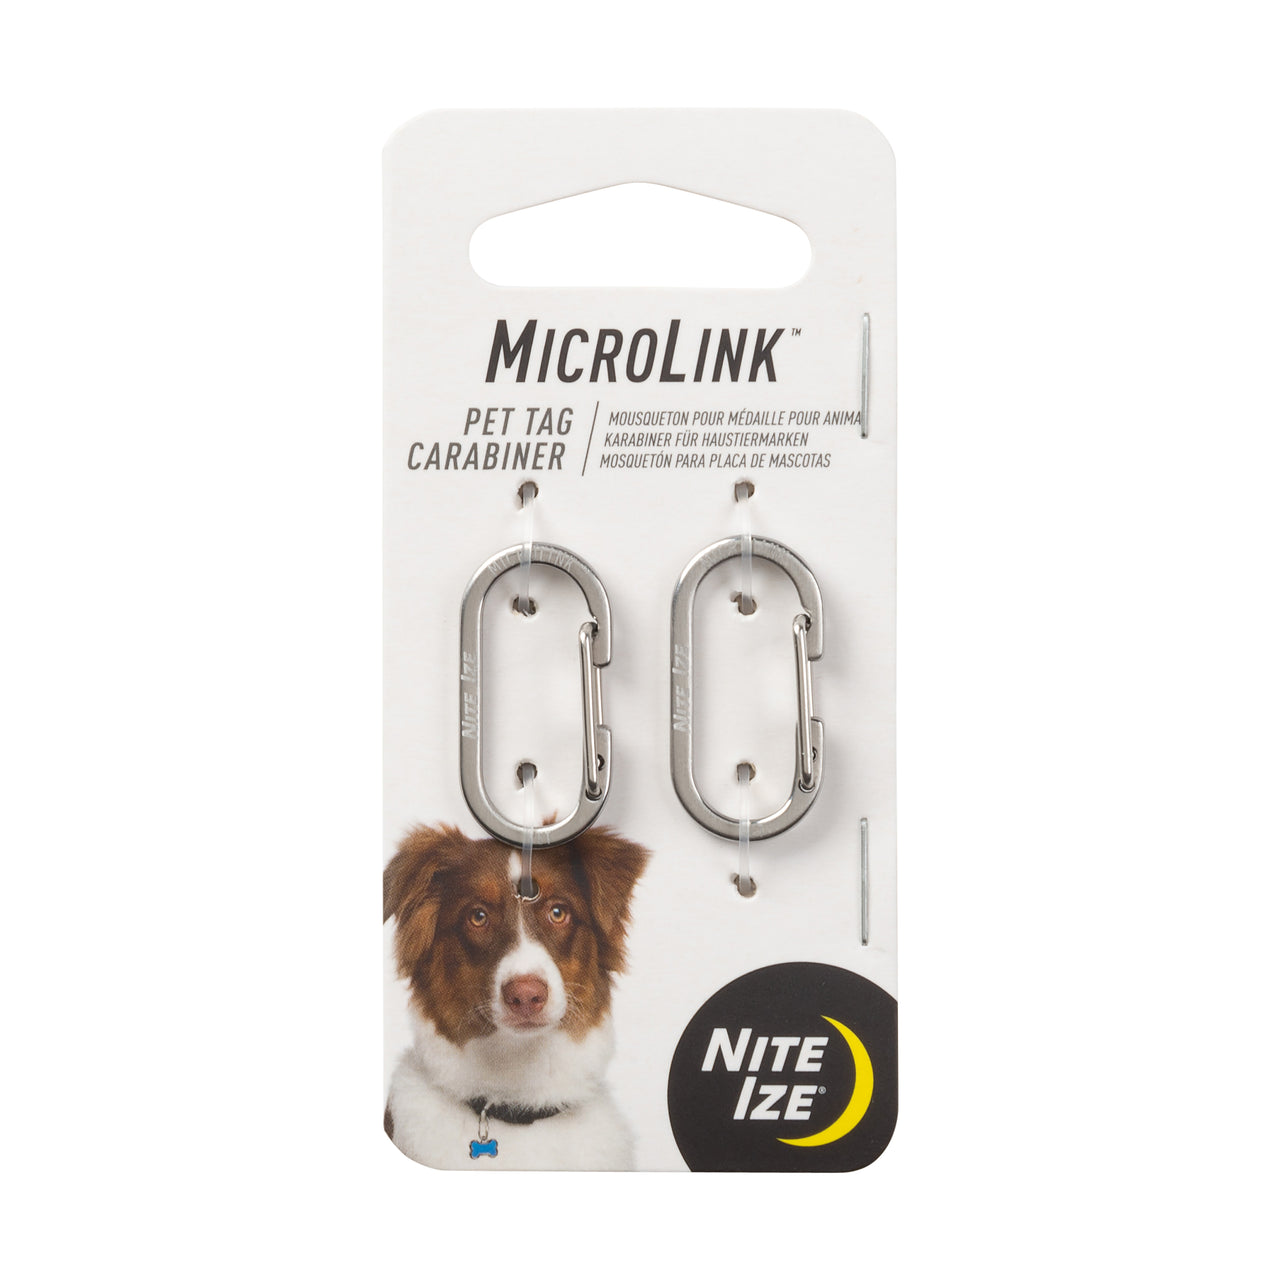 MicroLink Pet Tag Carabiner Stainless Steel - 2 Pack